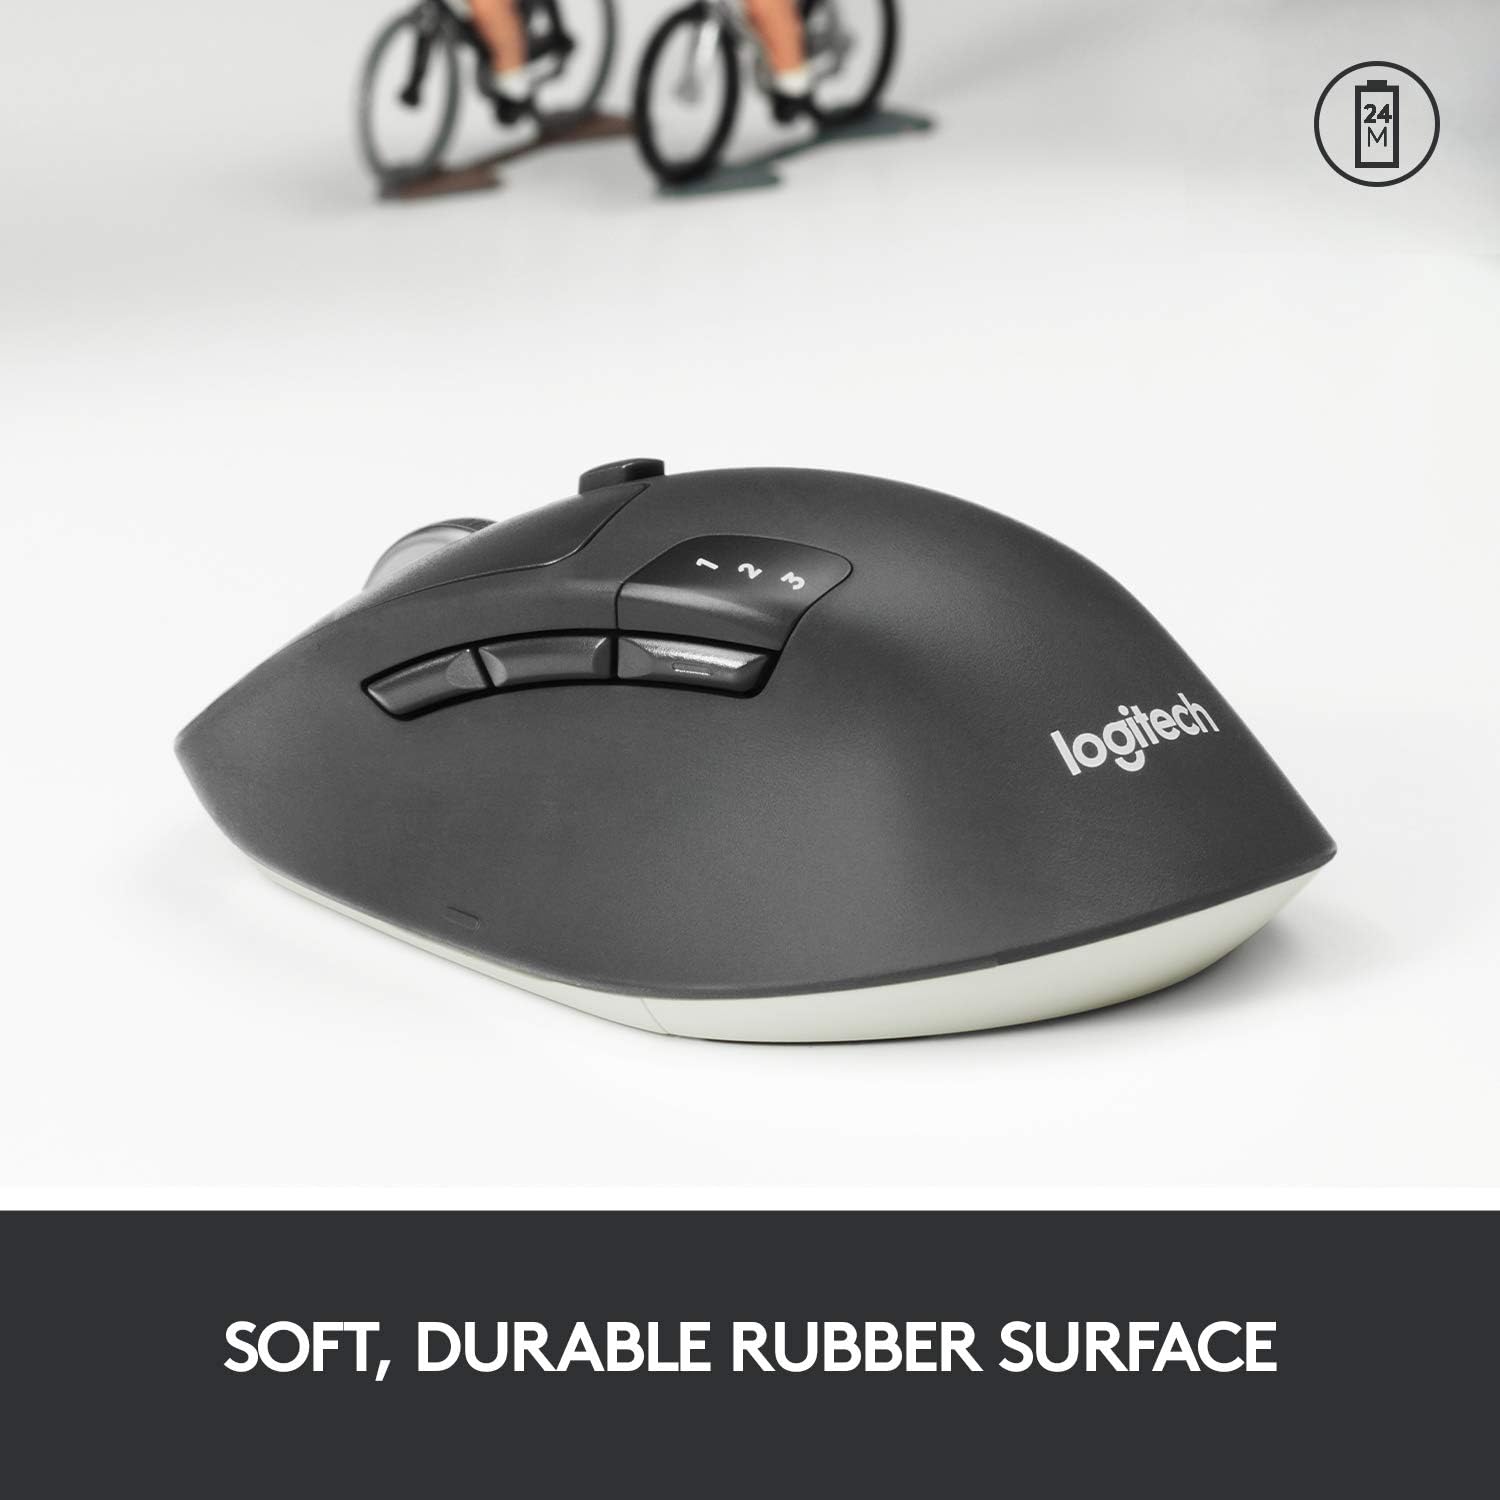 Perspective: Logitech M720 Triathlon Multi-Device Wireless Mouse